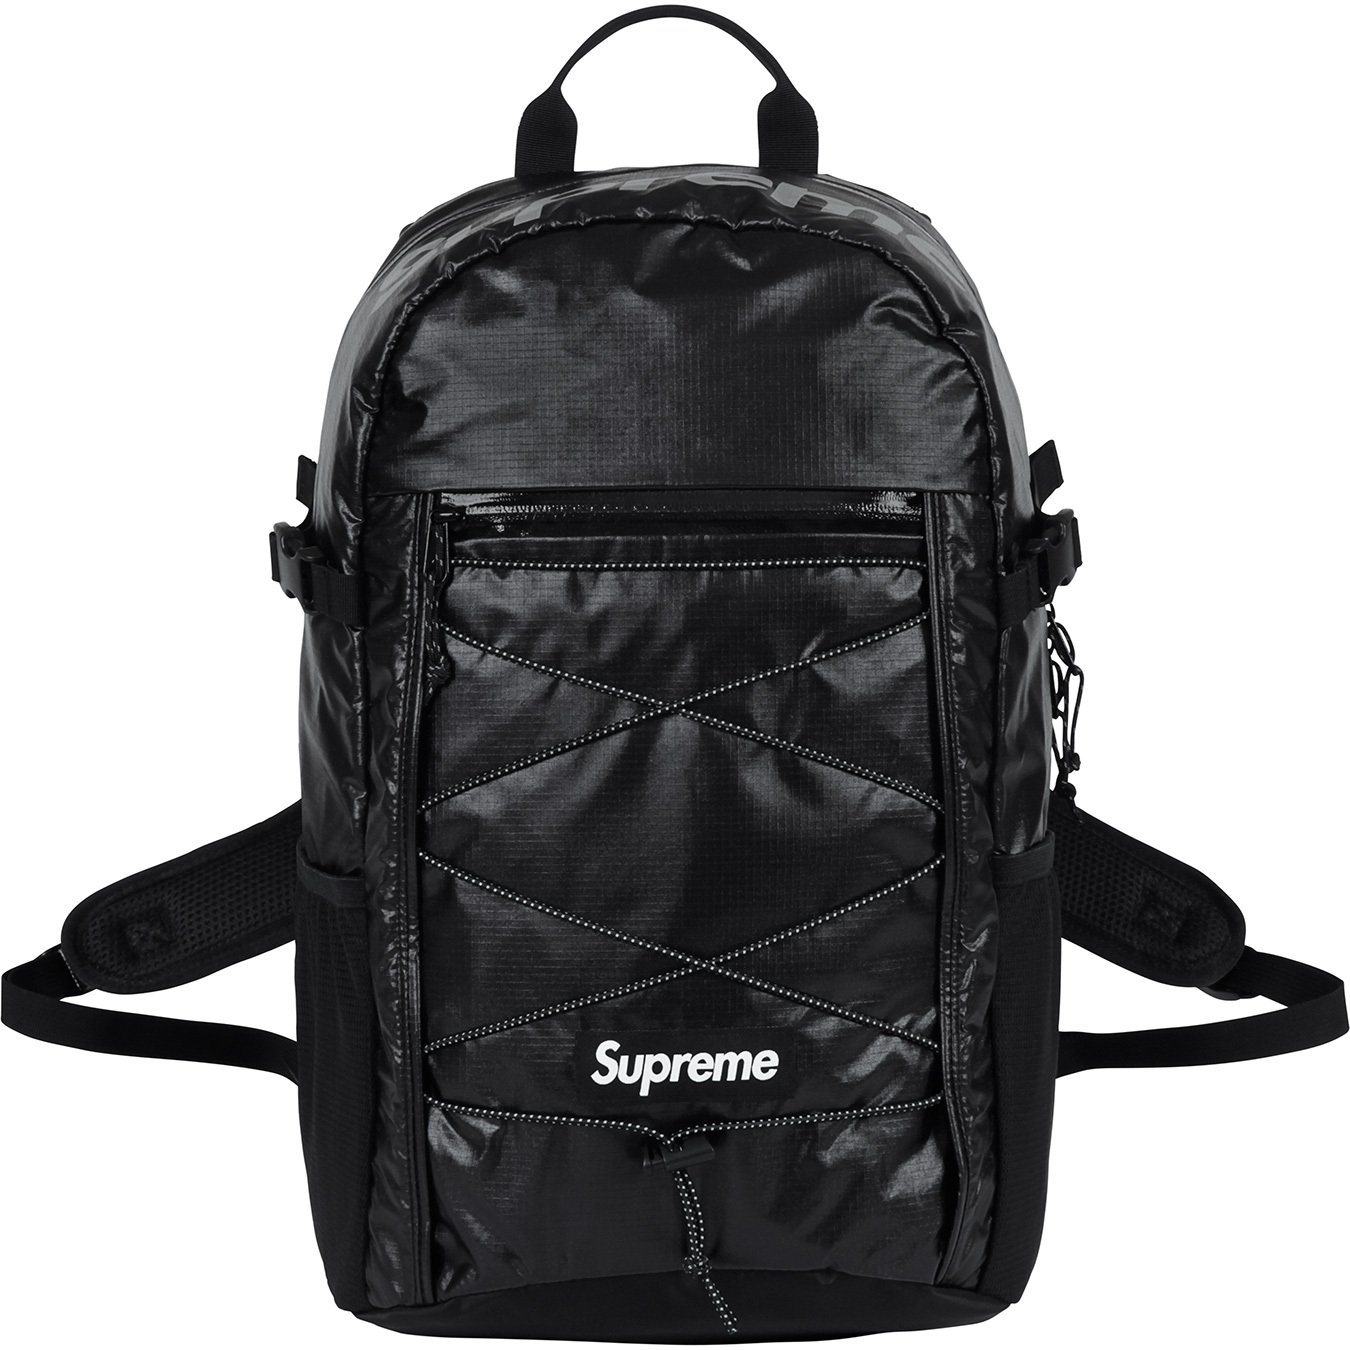 Supreme 2016 aw backpack